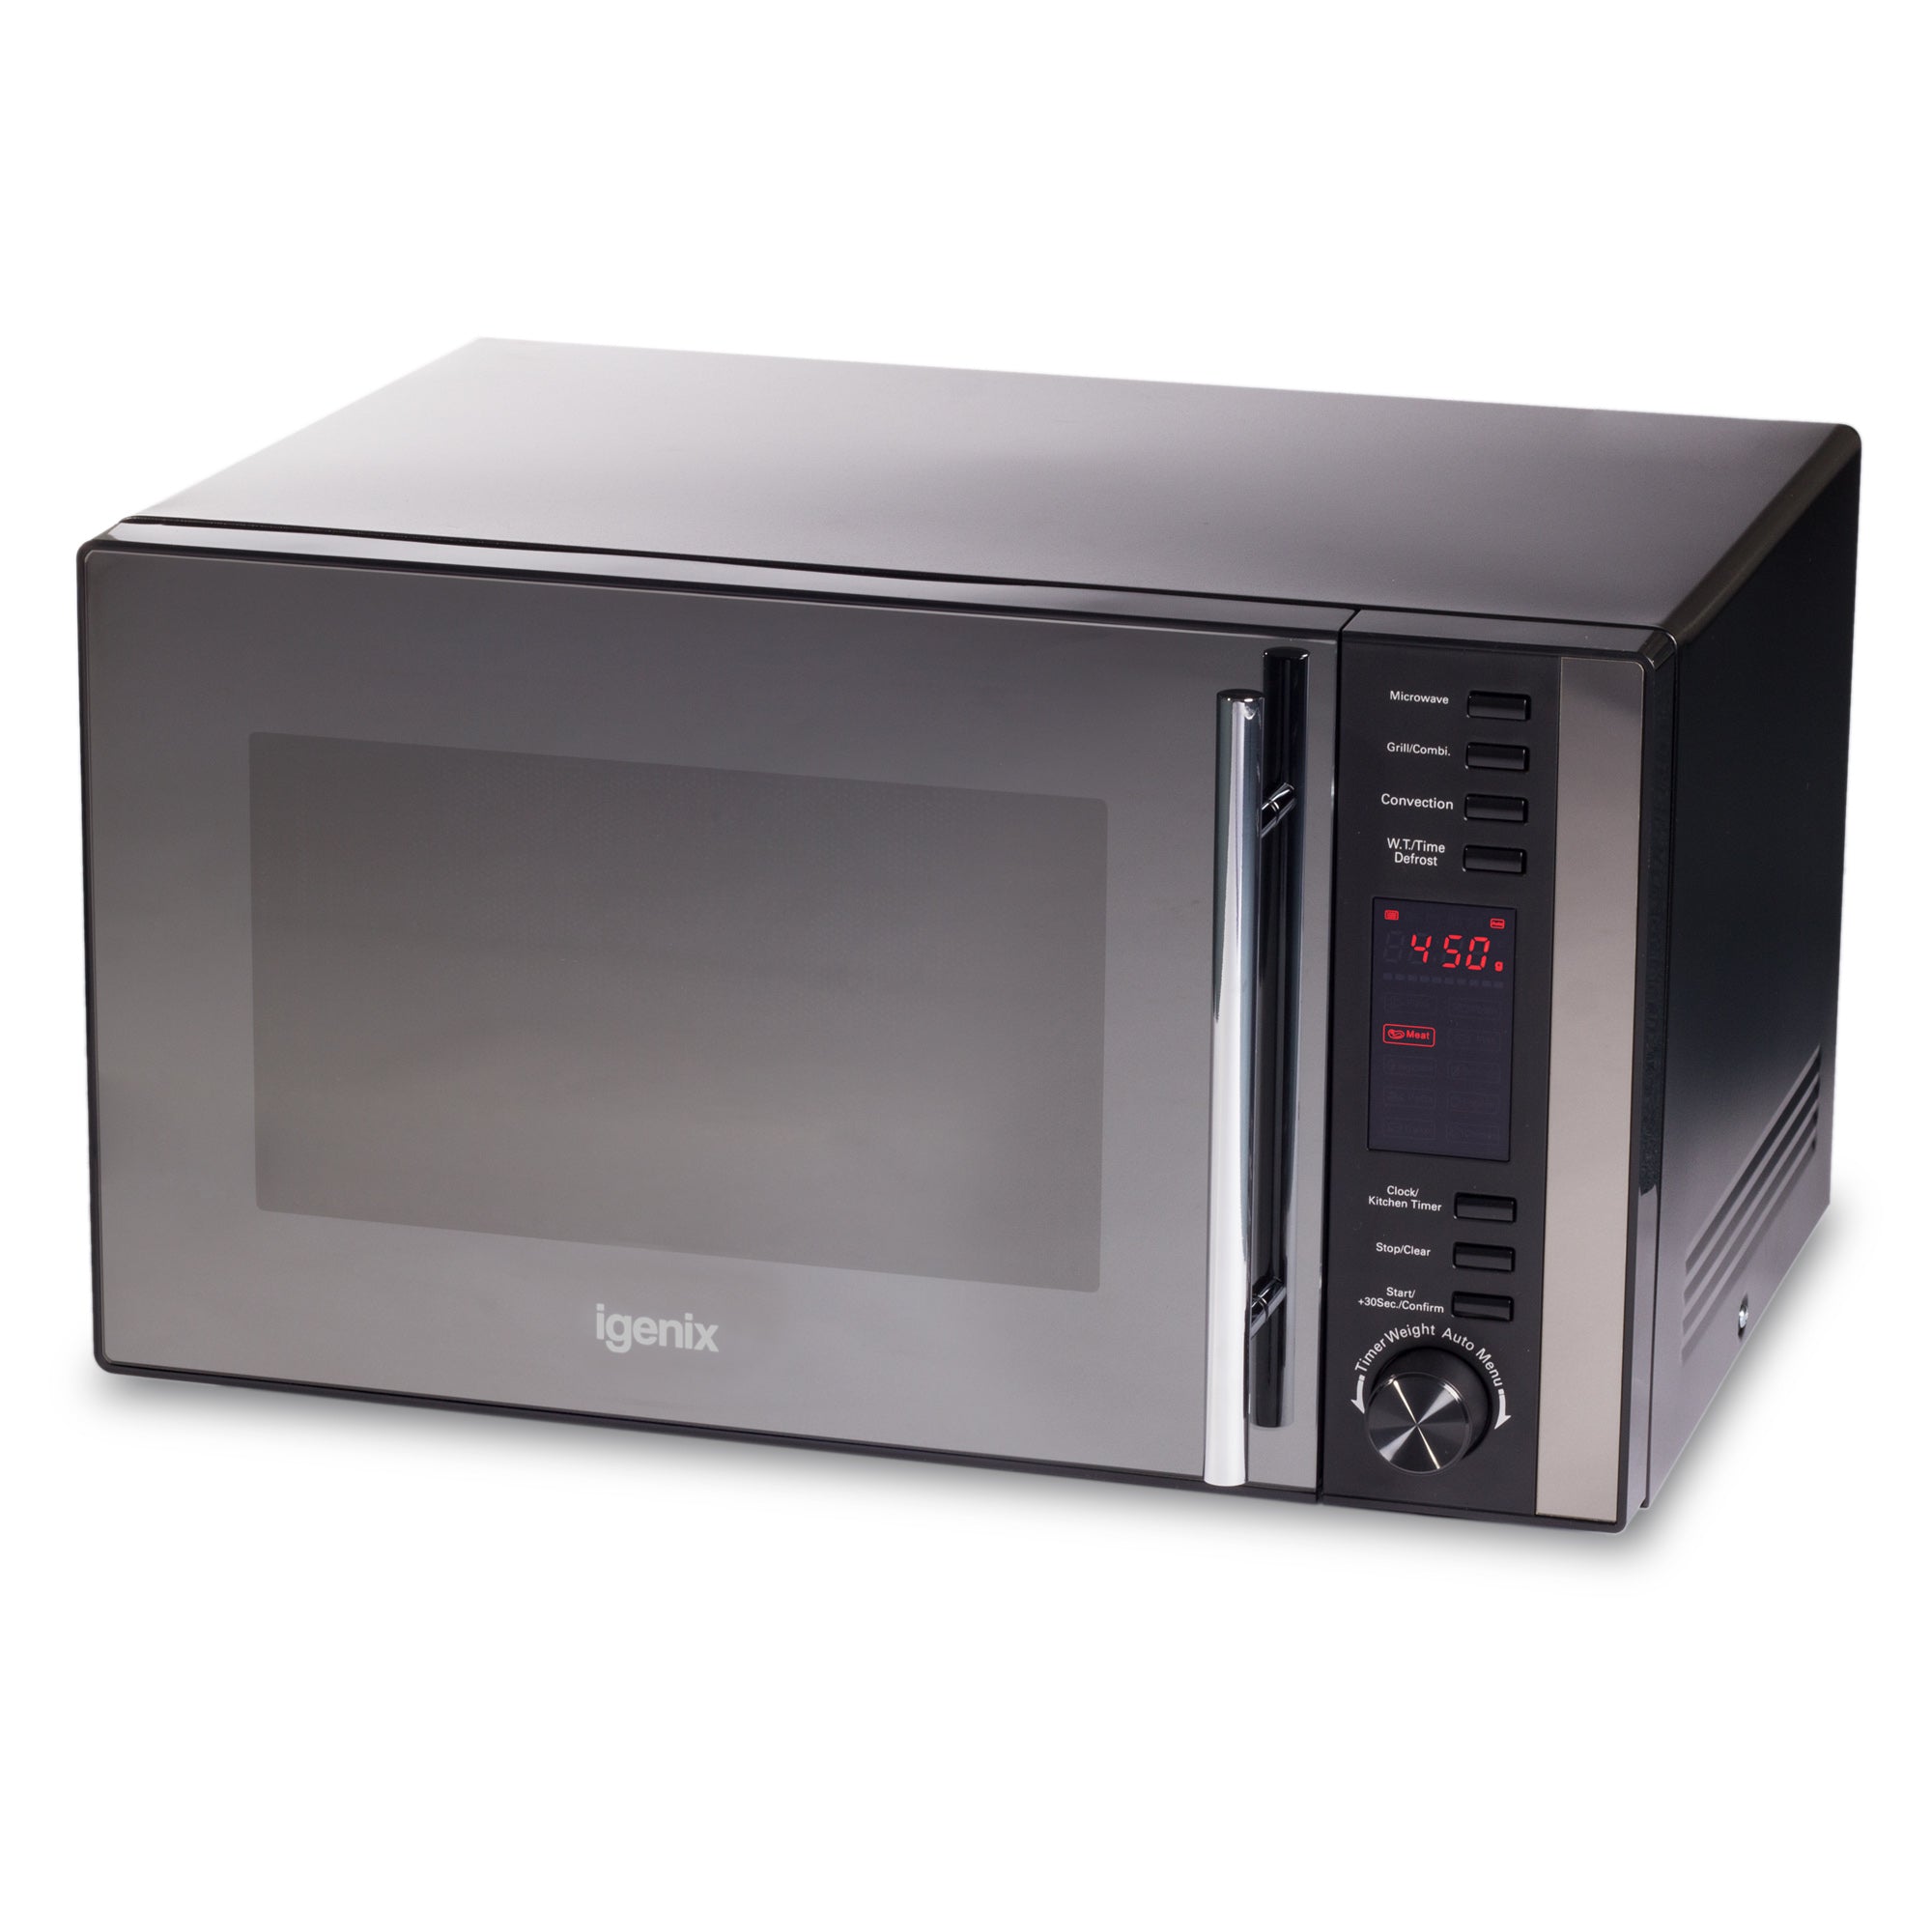 Digital Microwave, 25 Litre, 95 Minute Timer, 900W, Black